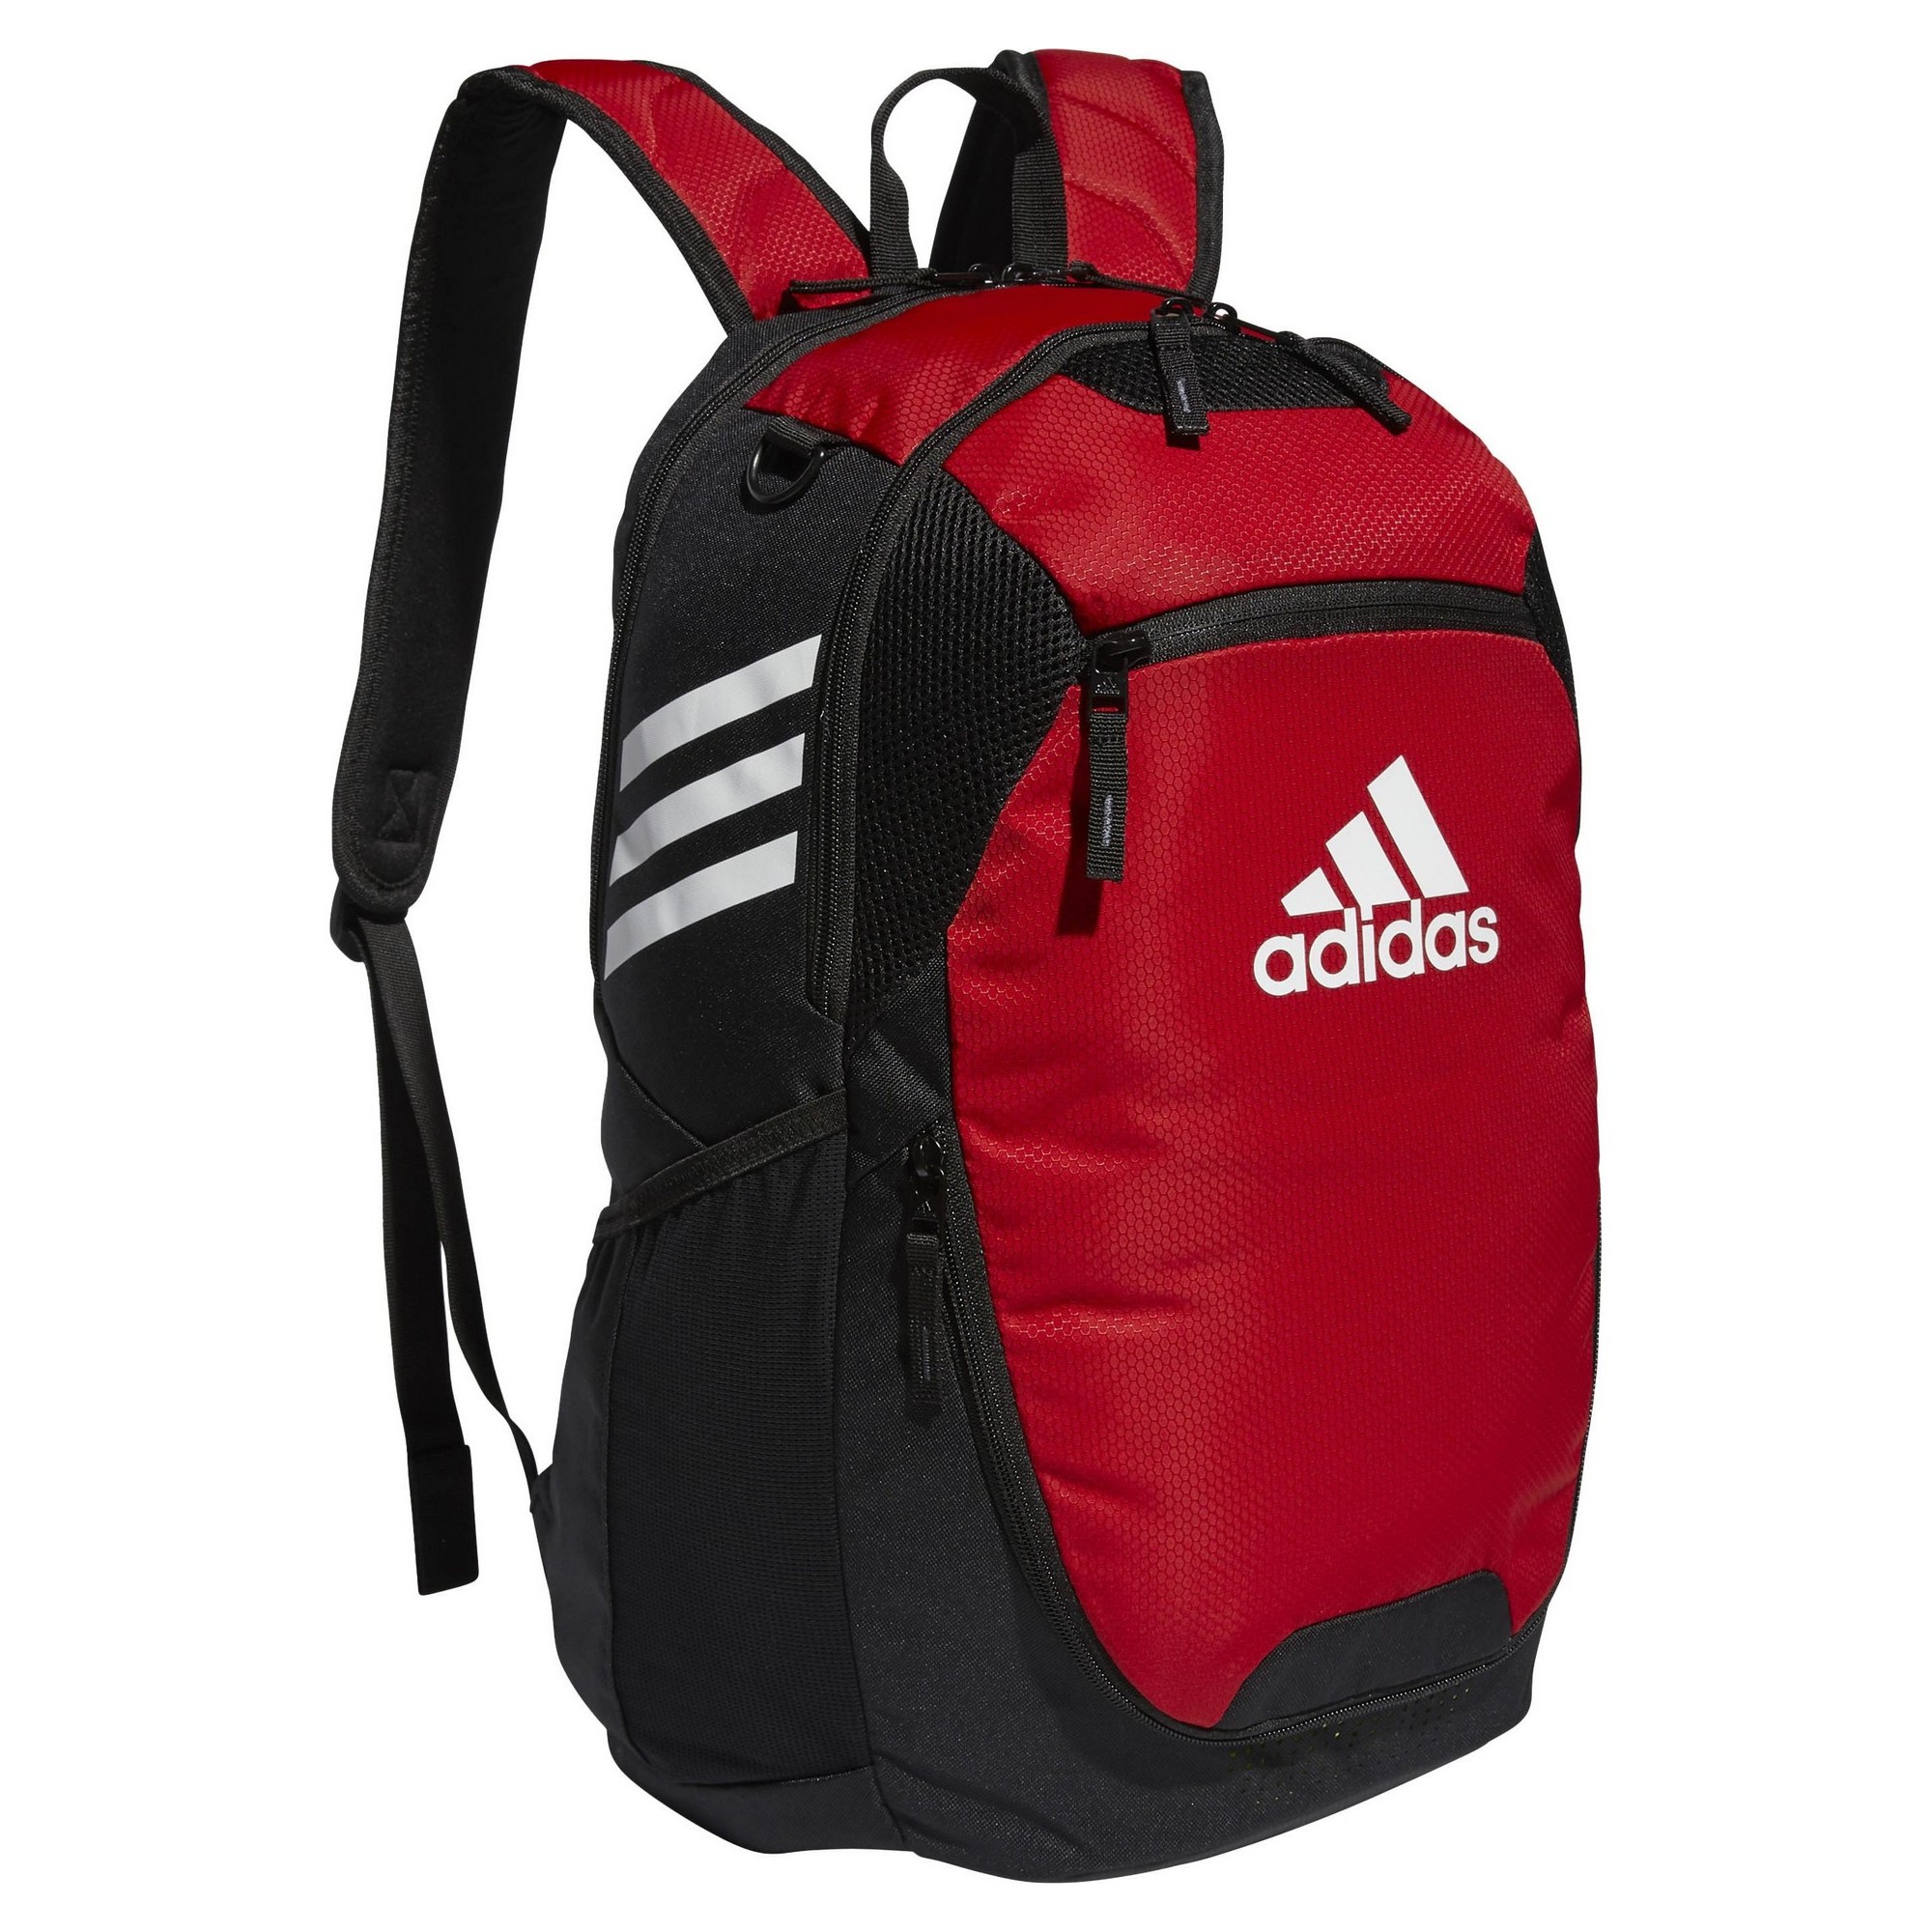 adidas Stadium 3 Sports Backpack - Red